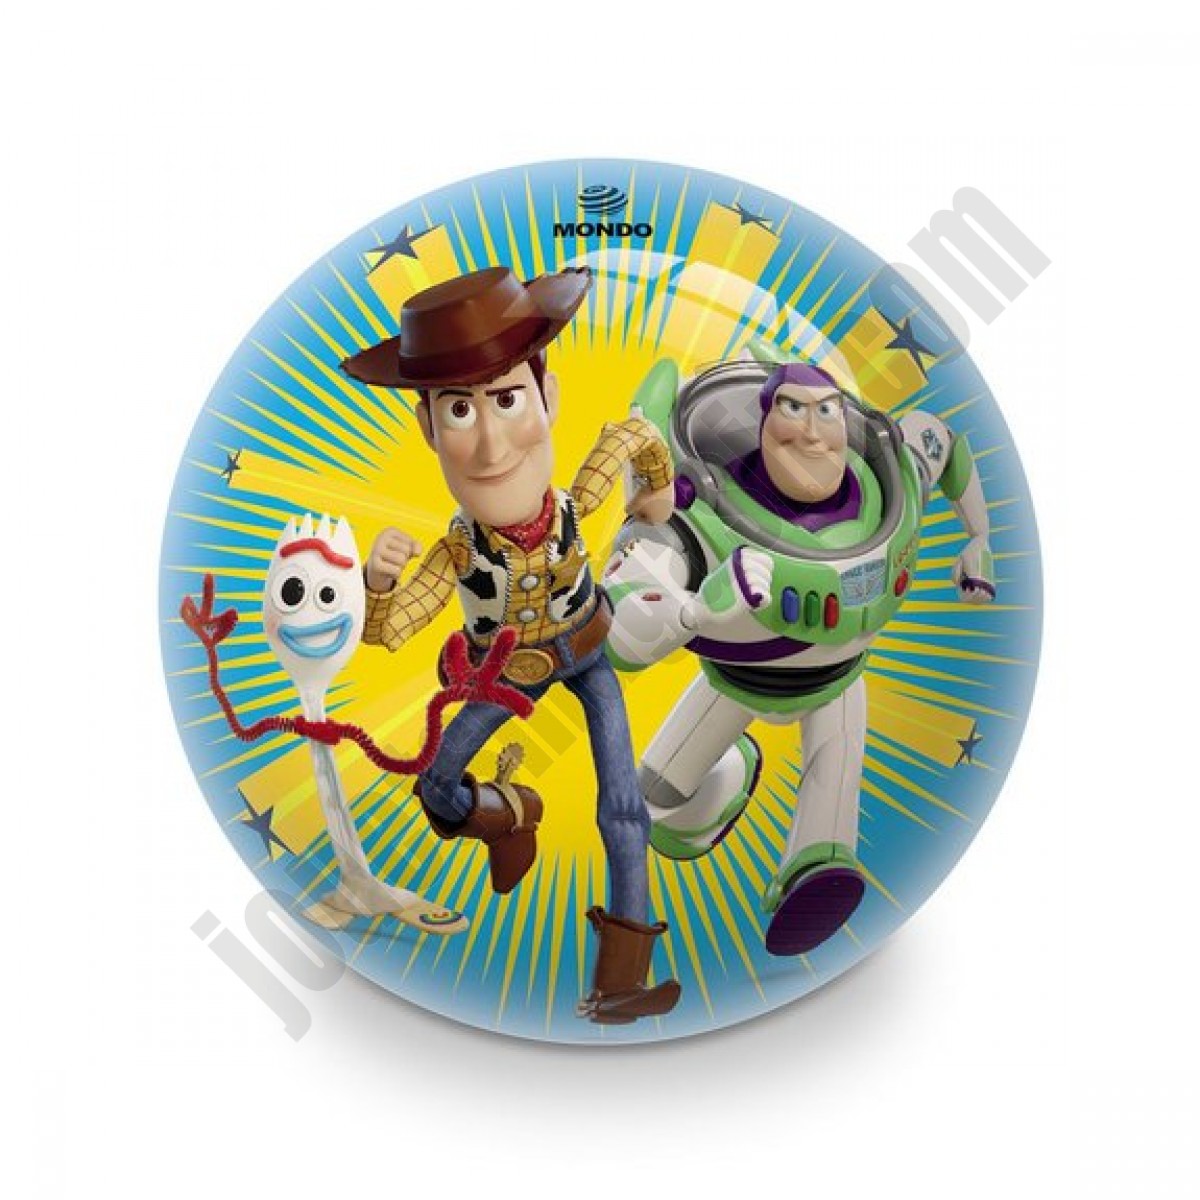 Ballon Toy Story 4 En promotion - Ballon Toy Story 4 En promotion